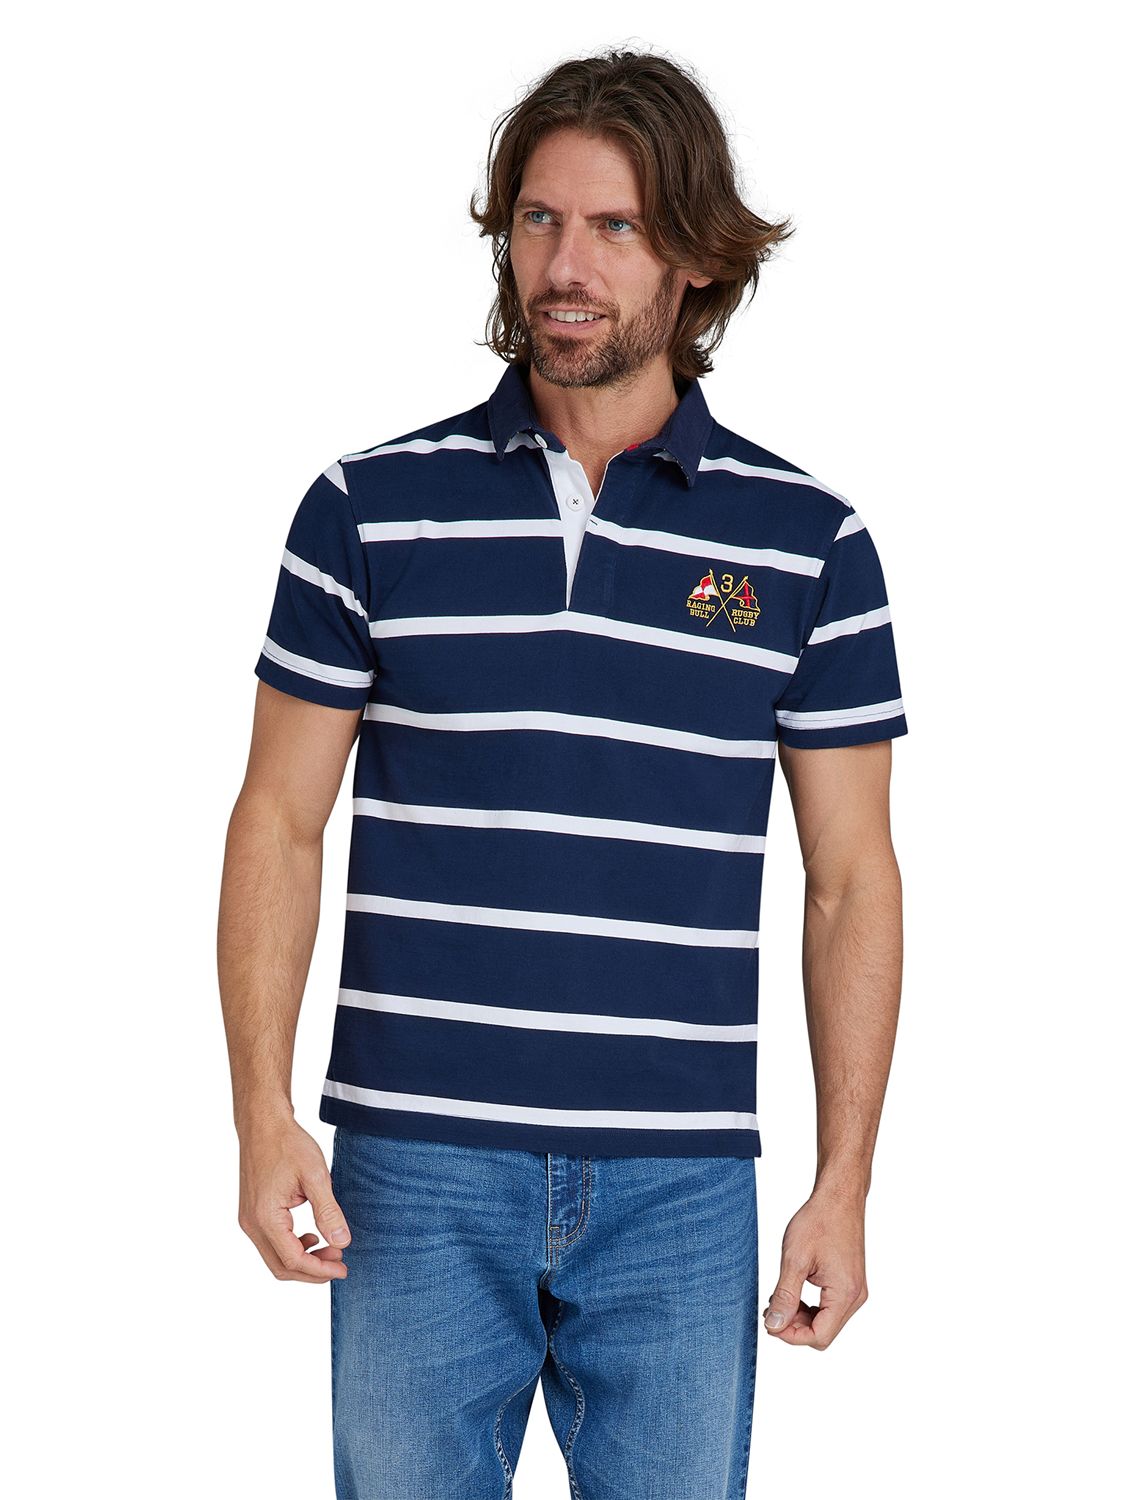 Raging Bull Short Sleeve Fine Stripe Rugby Top, Navy/White, XL